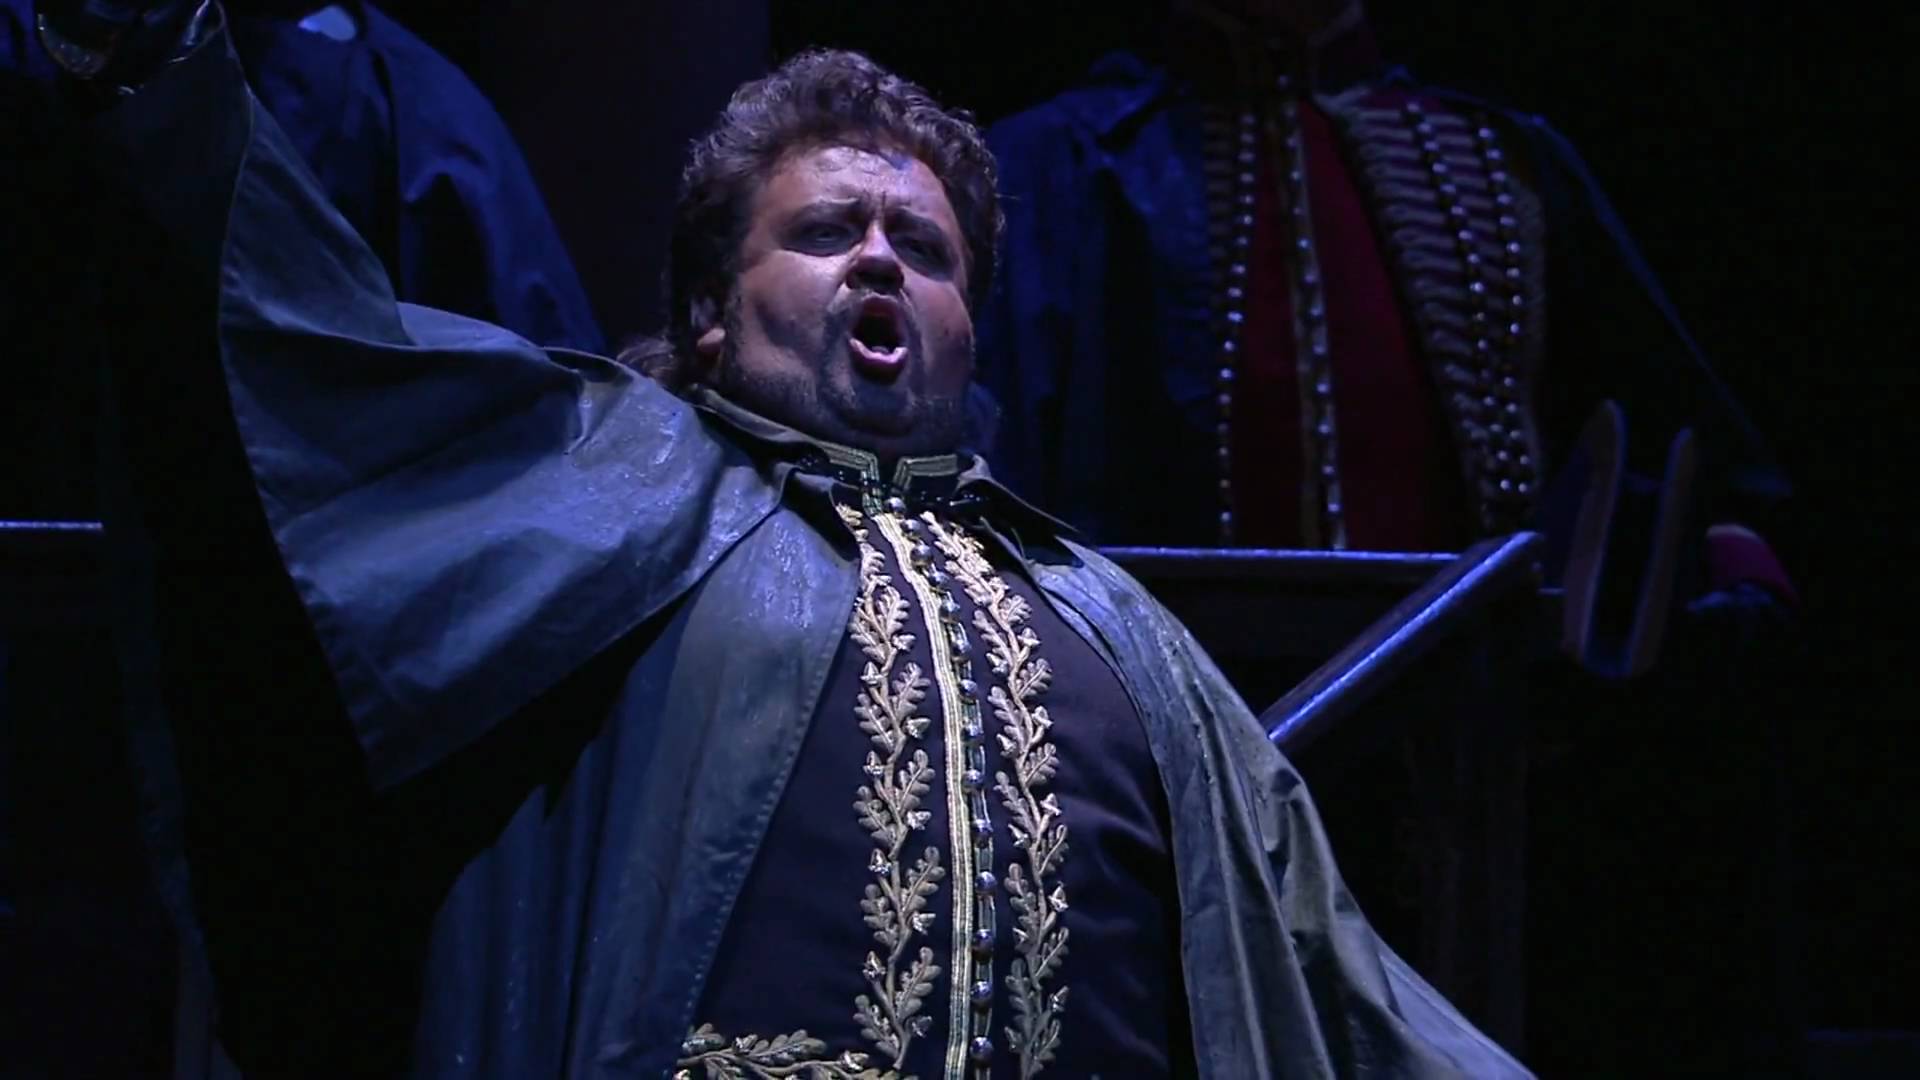 Tragic news: A great tenor is cut short at 51